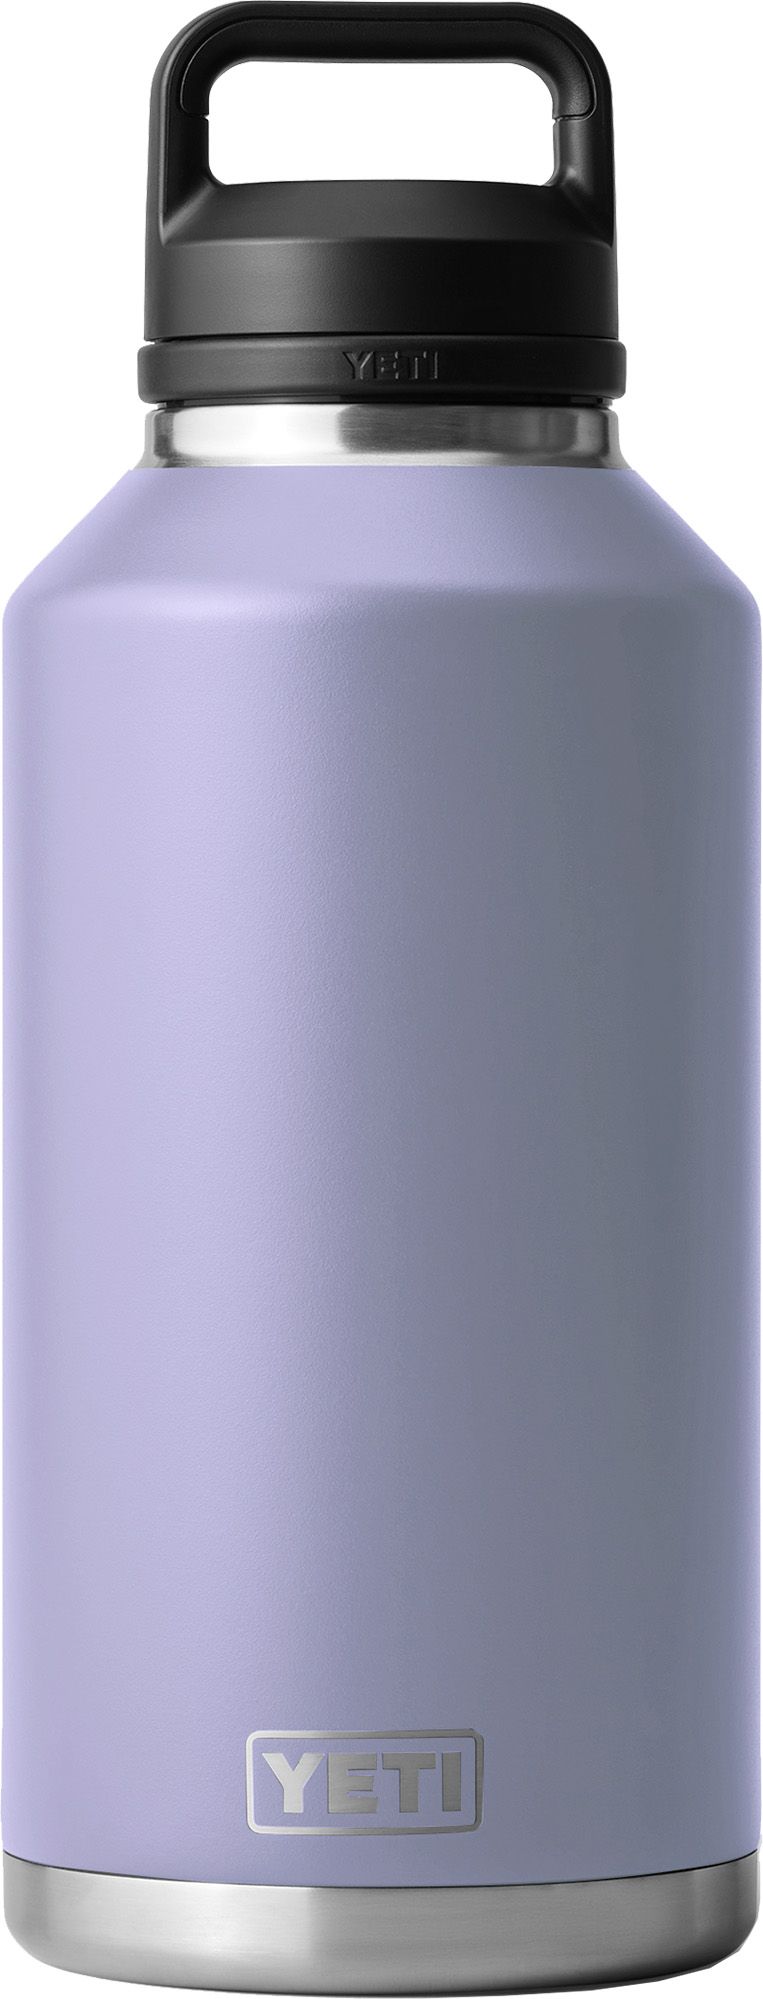 Photos - Other Accessories Yeti 64 oz. Rambler Bottle with Chug Cap, Cosmic Lilac 21YETURMBLR64ZBTTHY 